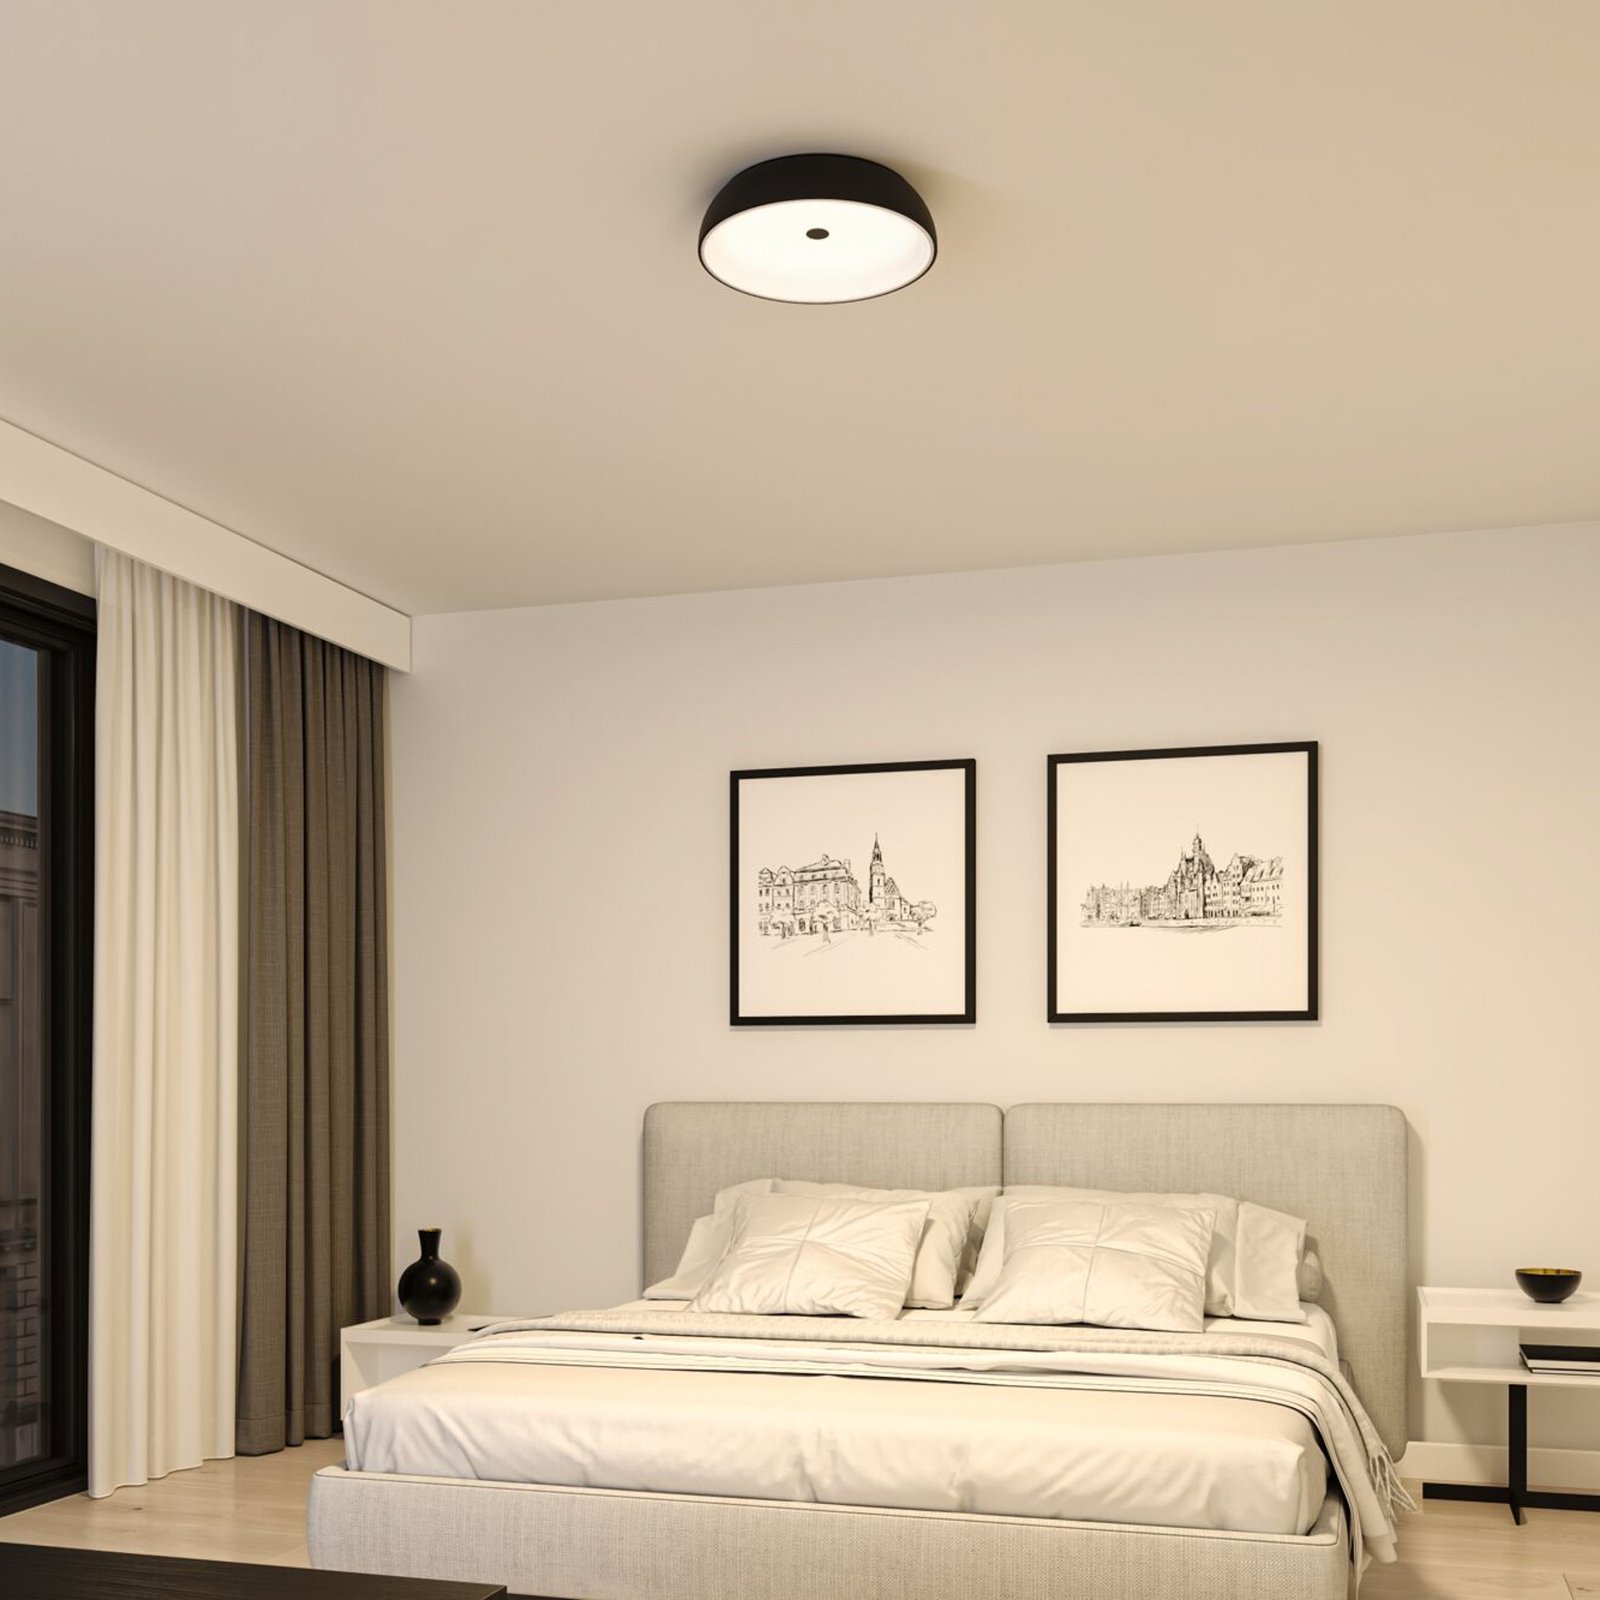 Paulmann Jaron LED plafondlamp 3-step-dim, zwart